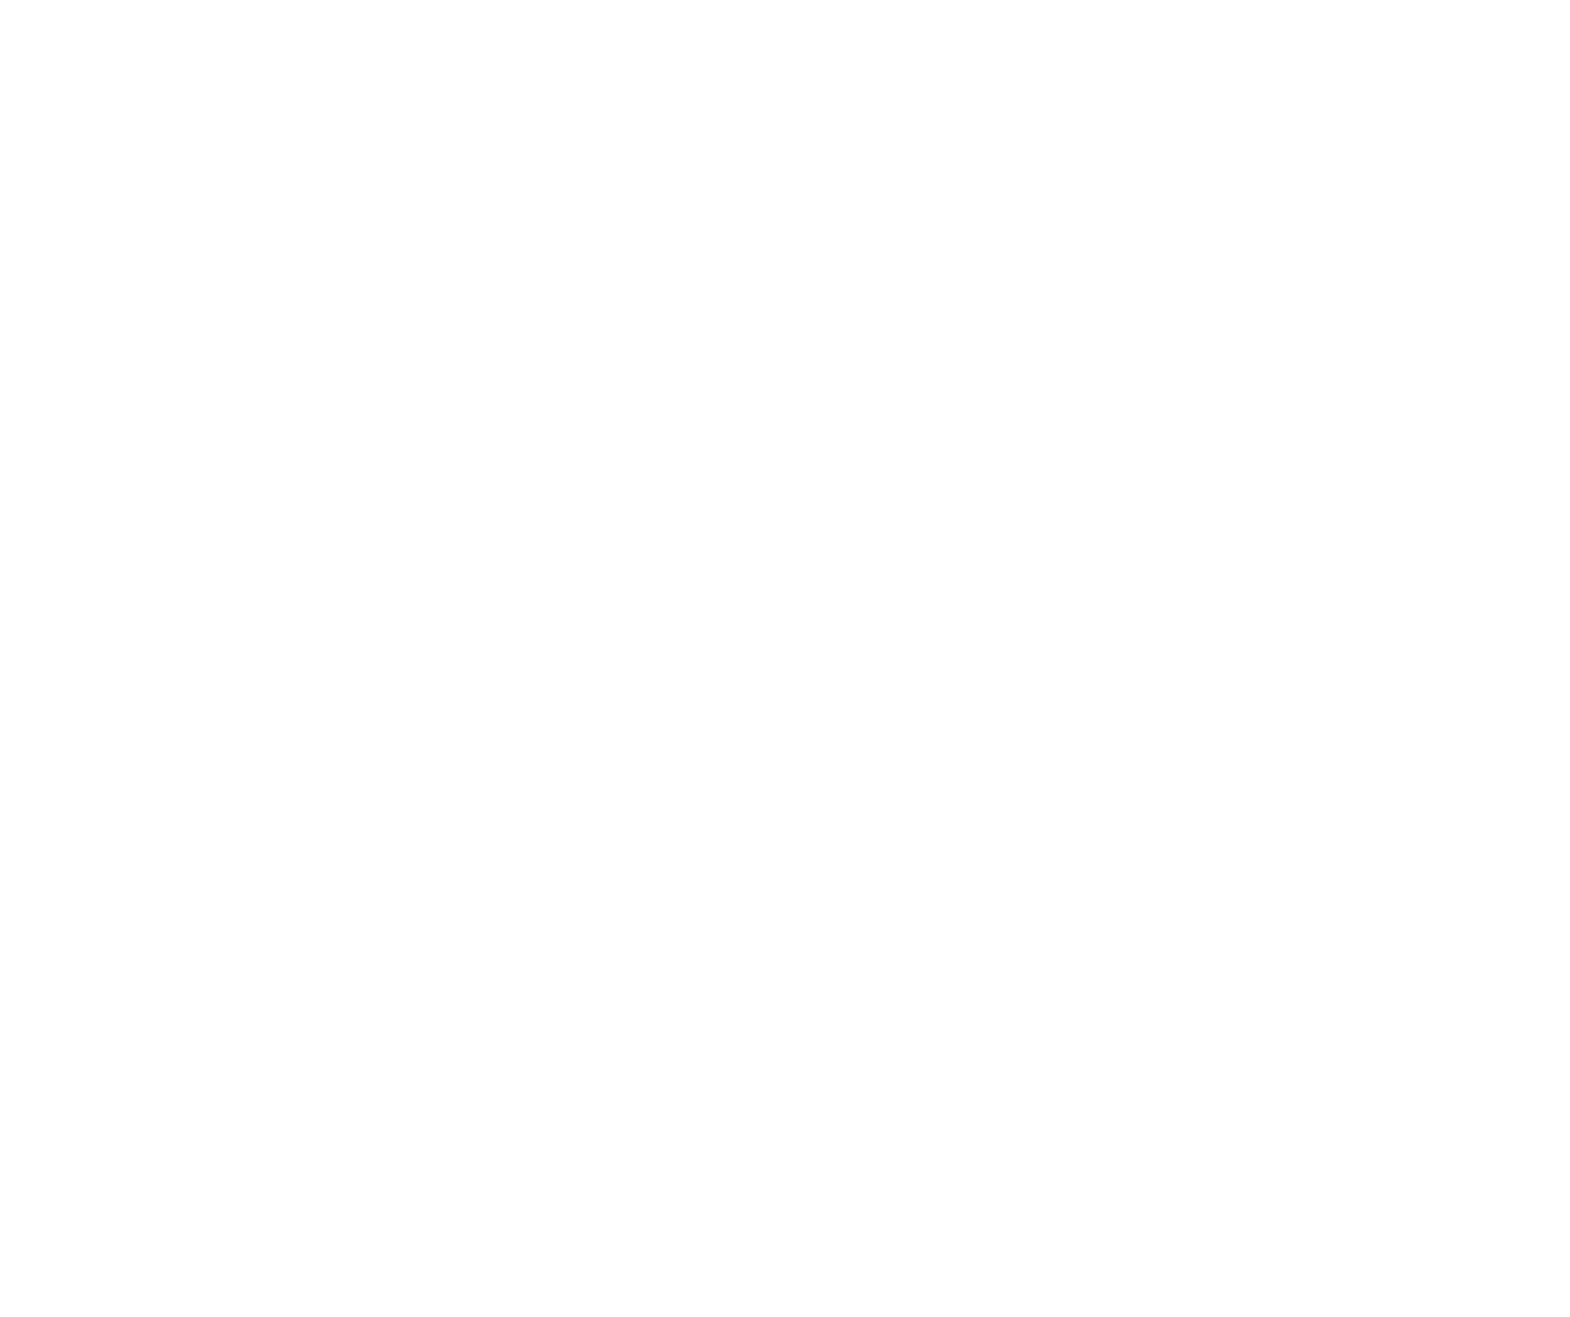 Cricket Video Games